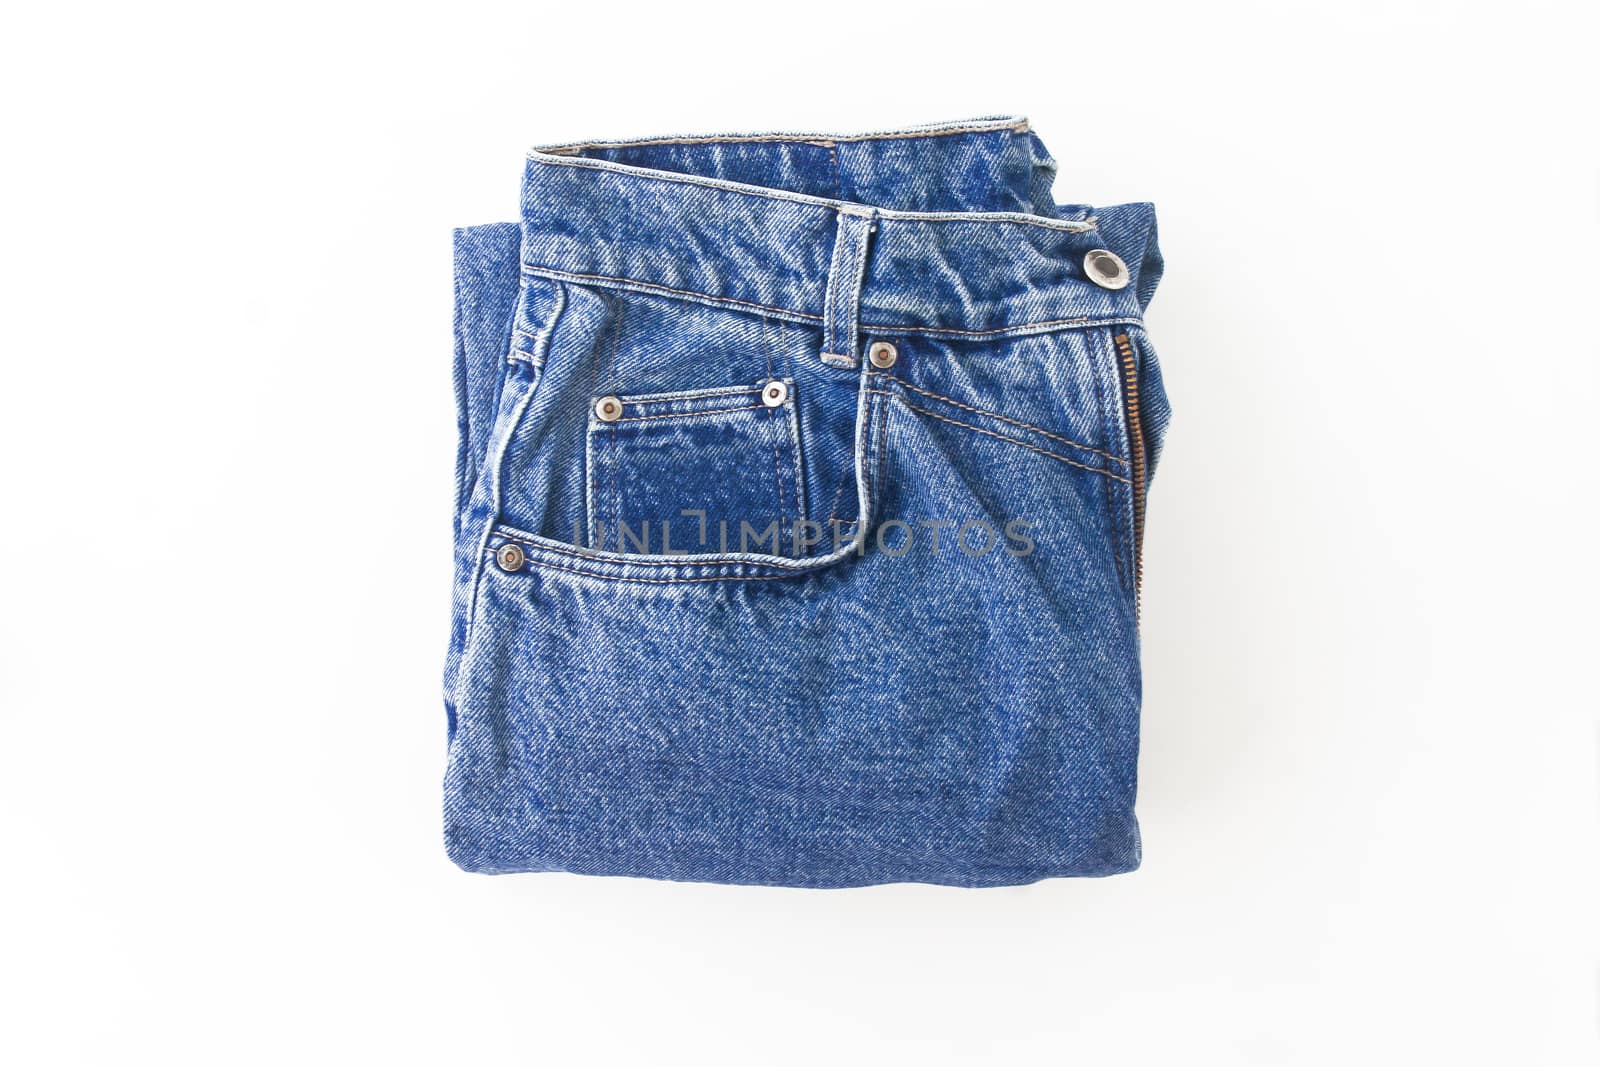 Light blue retro jeans neatly folded, isolated.